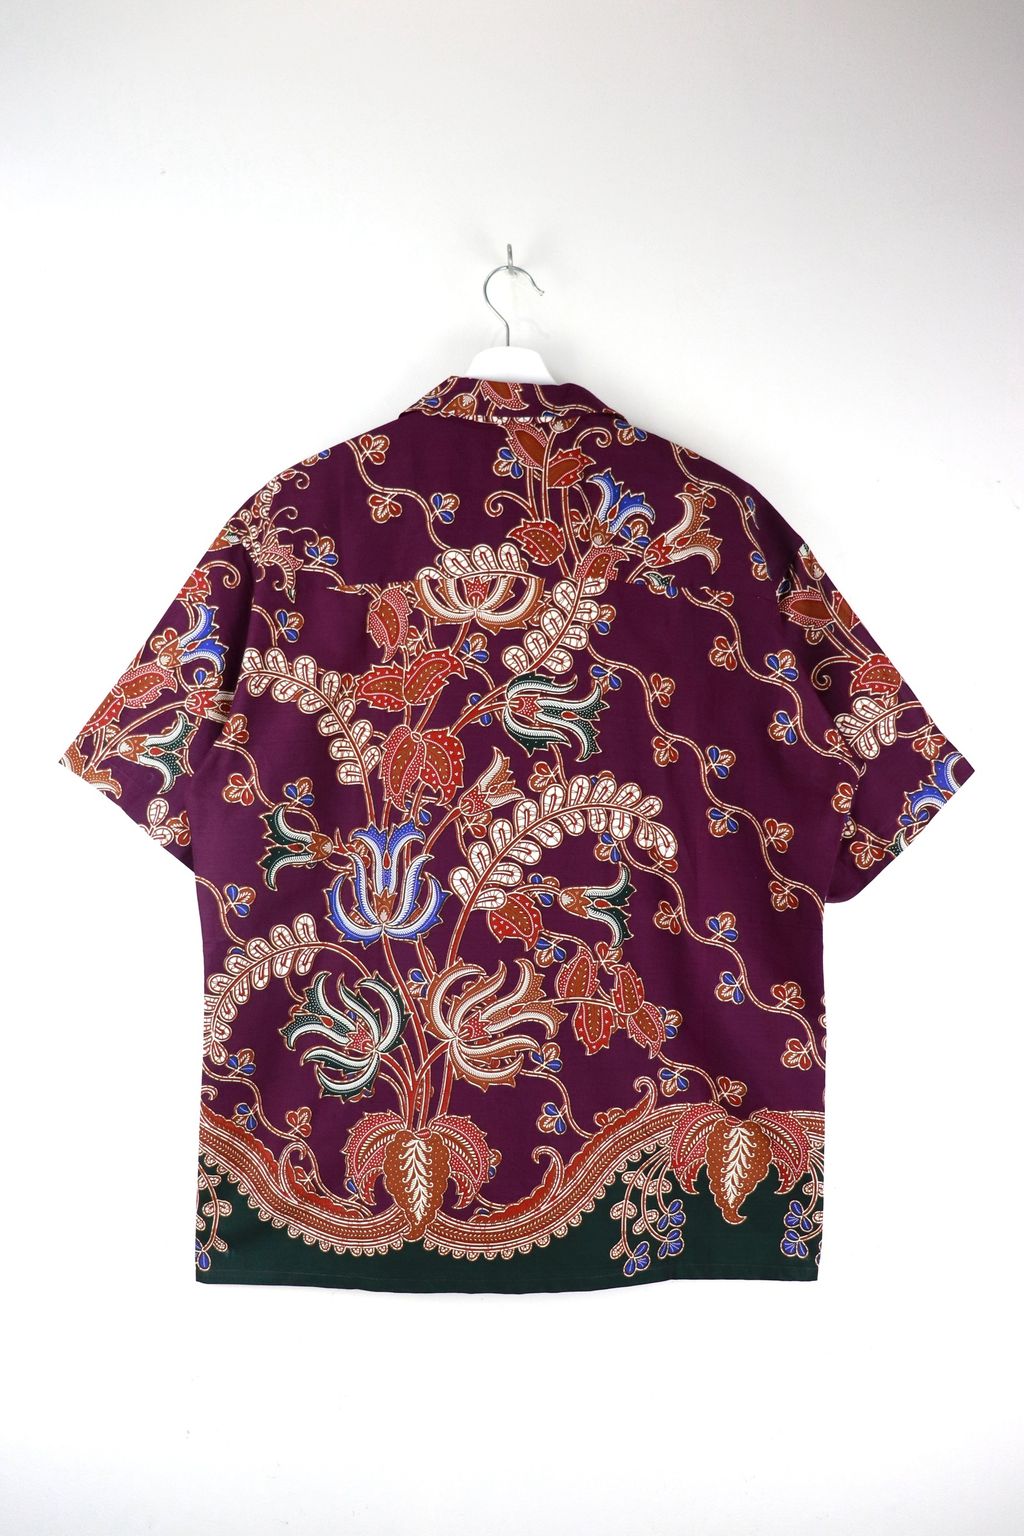 kanoemen-open-collared-batik-shirt-61